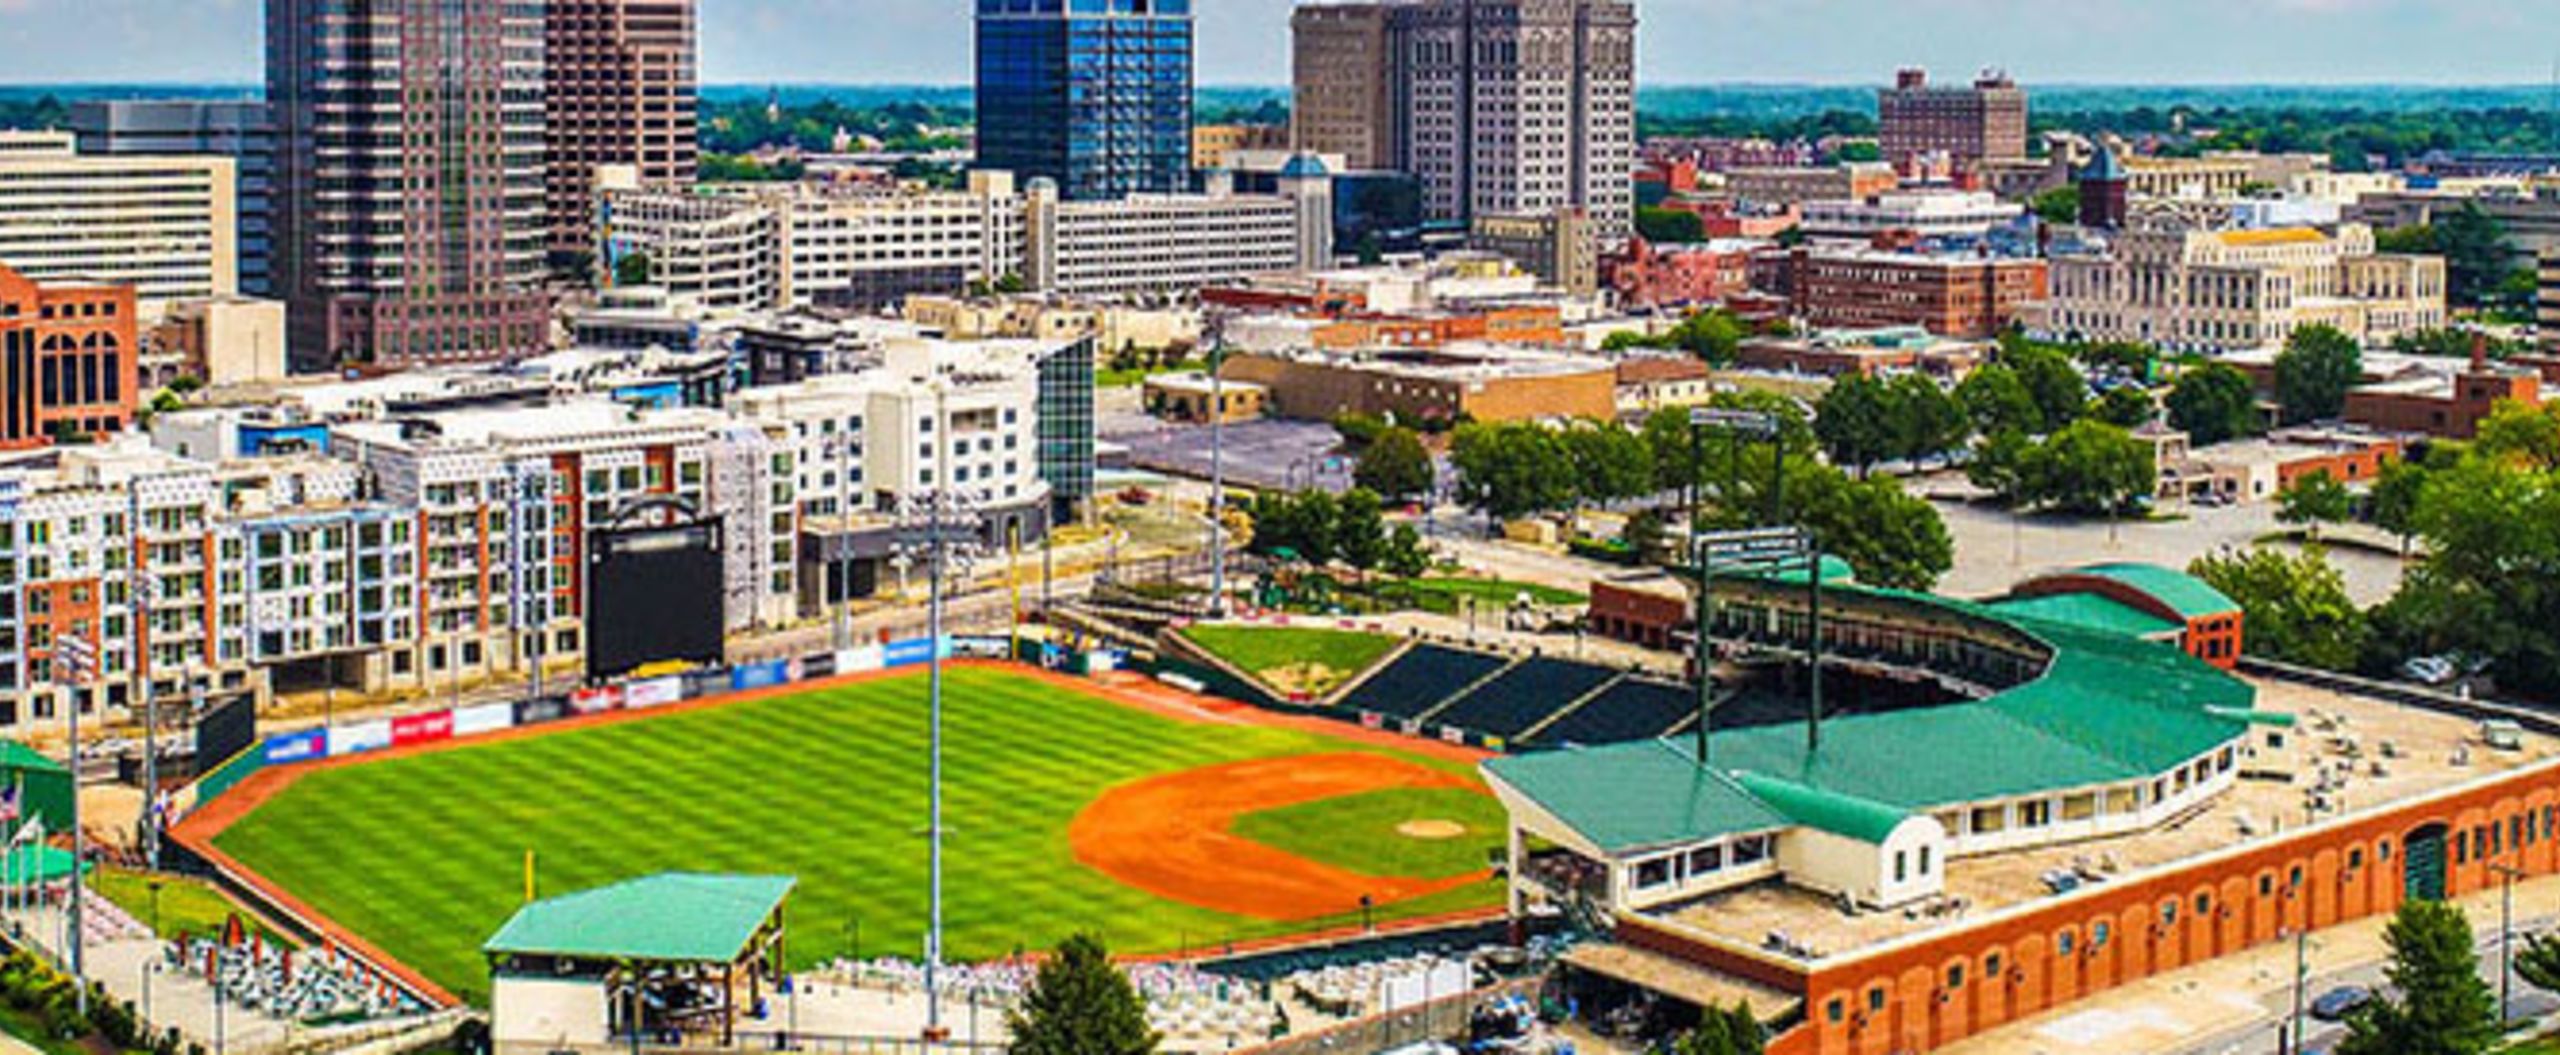 Downtown Greensboro, Greensboro Grasshopper Baseball